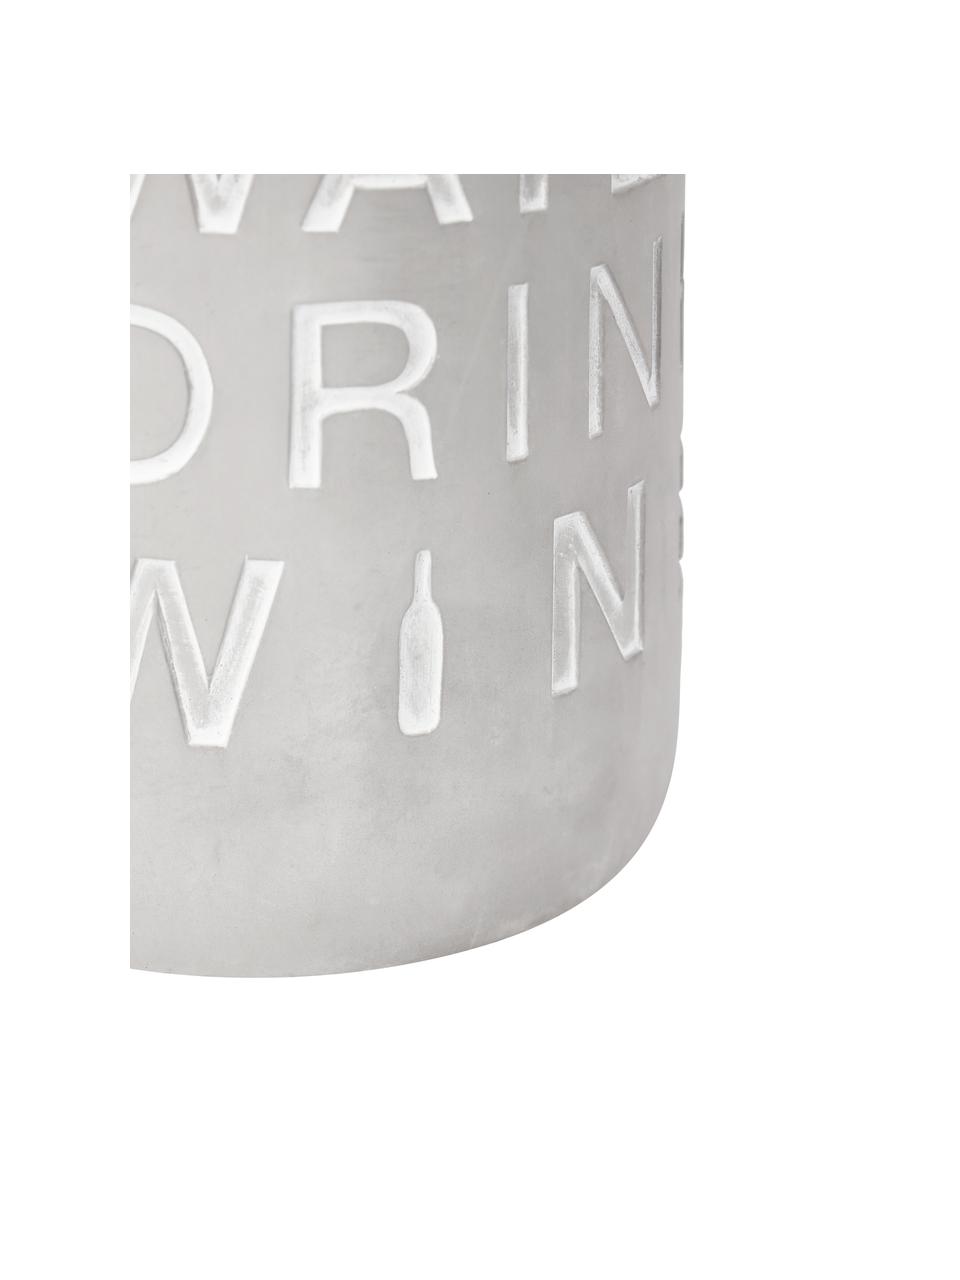 Flessenkoeler Drink Wine in grijs, Beton, Grijs, wit, Ø 14 x H 21 cm